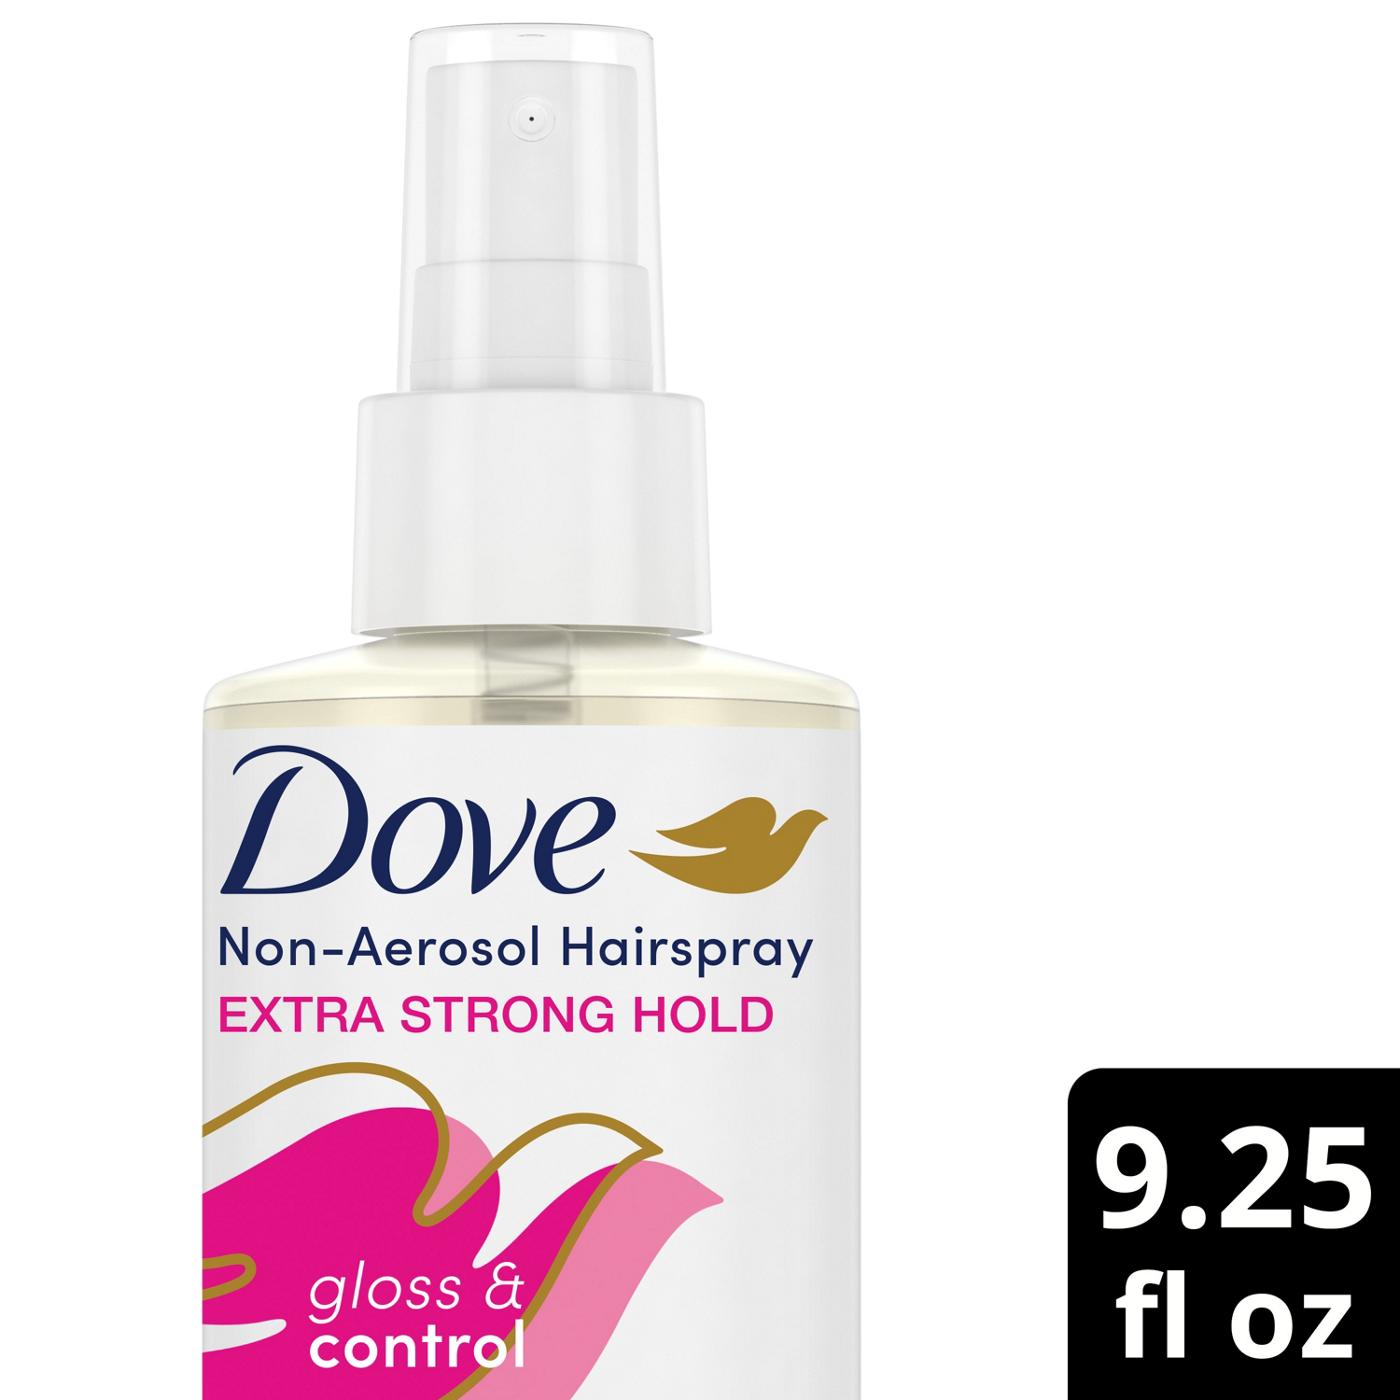 Dove Non-Aerosol Hairspray - Gloss & Control; image 7 of 7